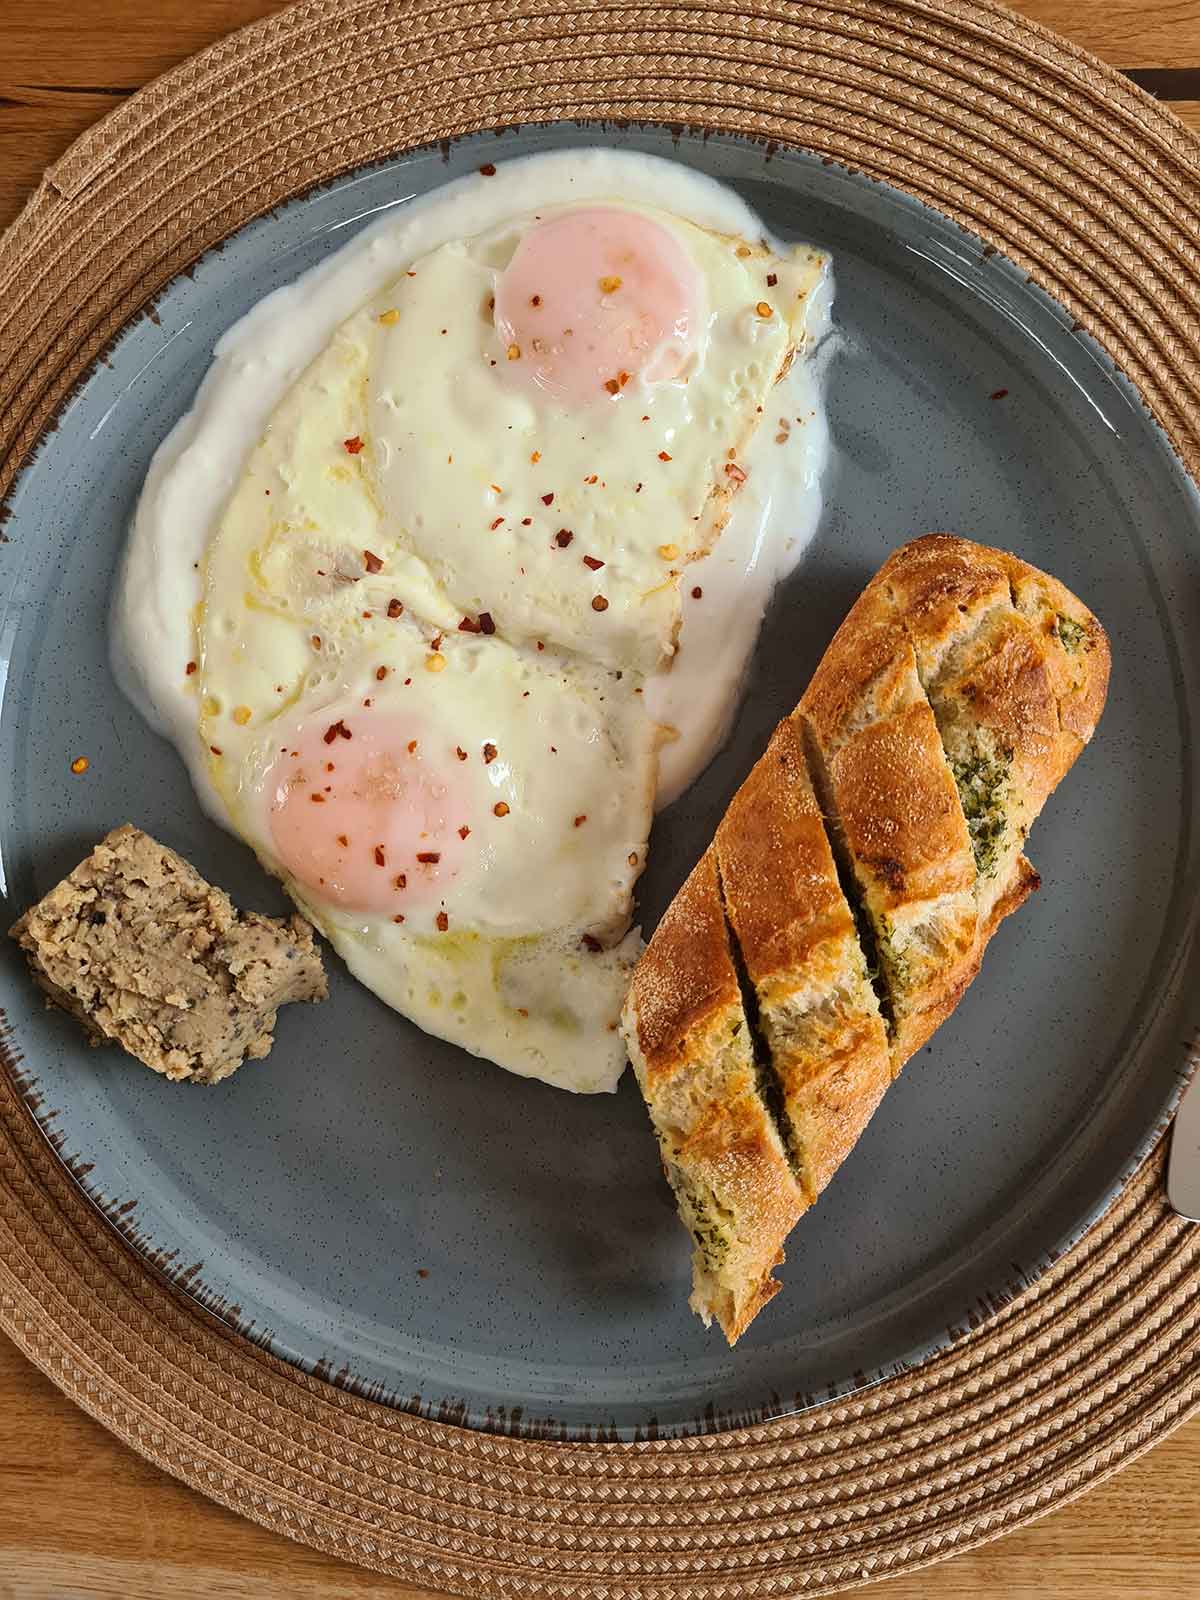 sunny side up eggs breakfast with garlic brea recipe